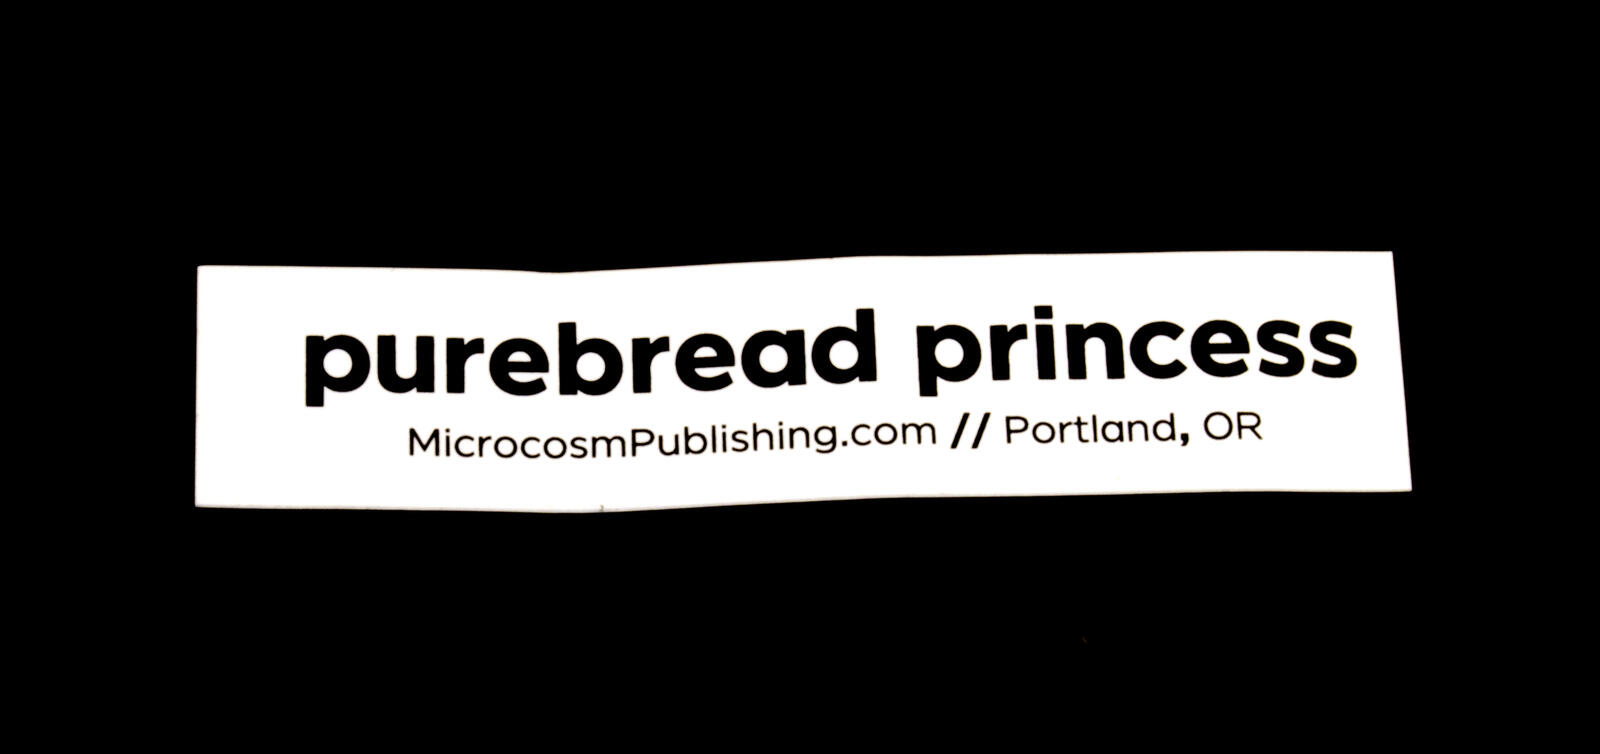 https://microcosmpublishing.com/previews/purebread-princess_blowup.jpg